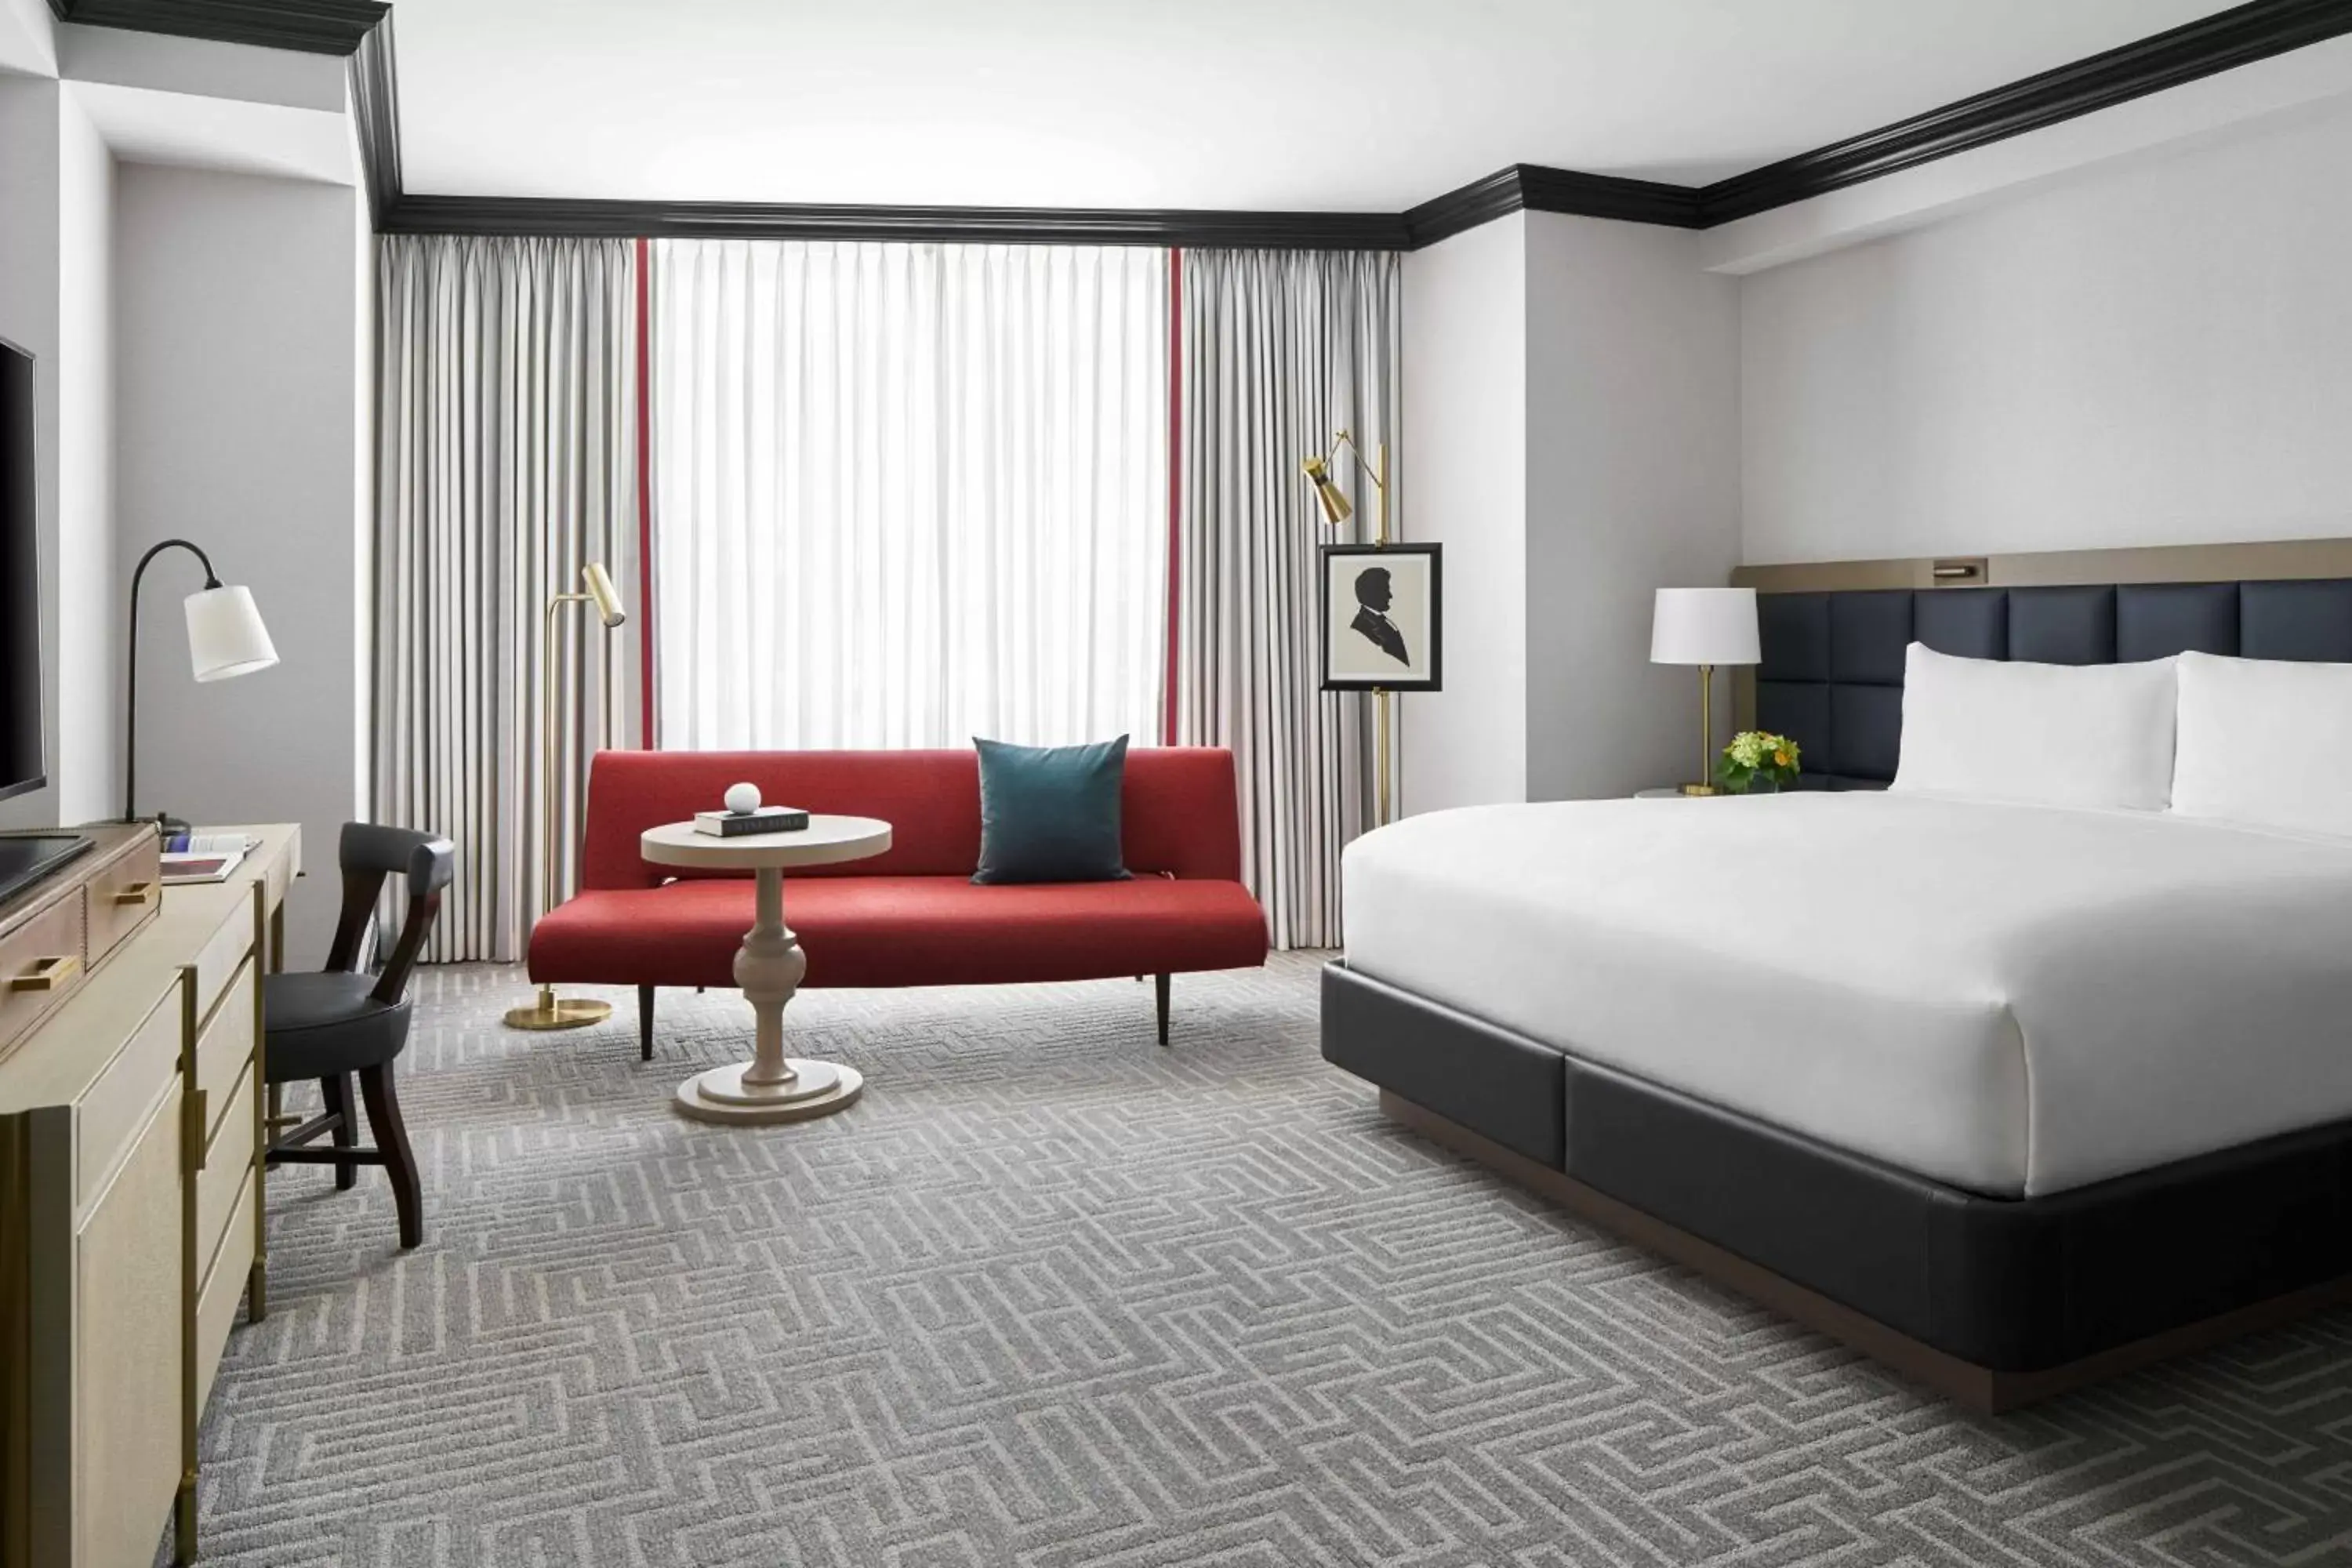 Photo of the whole room in The Ritz-Carlton, Washington, D.C.